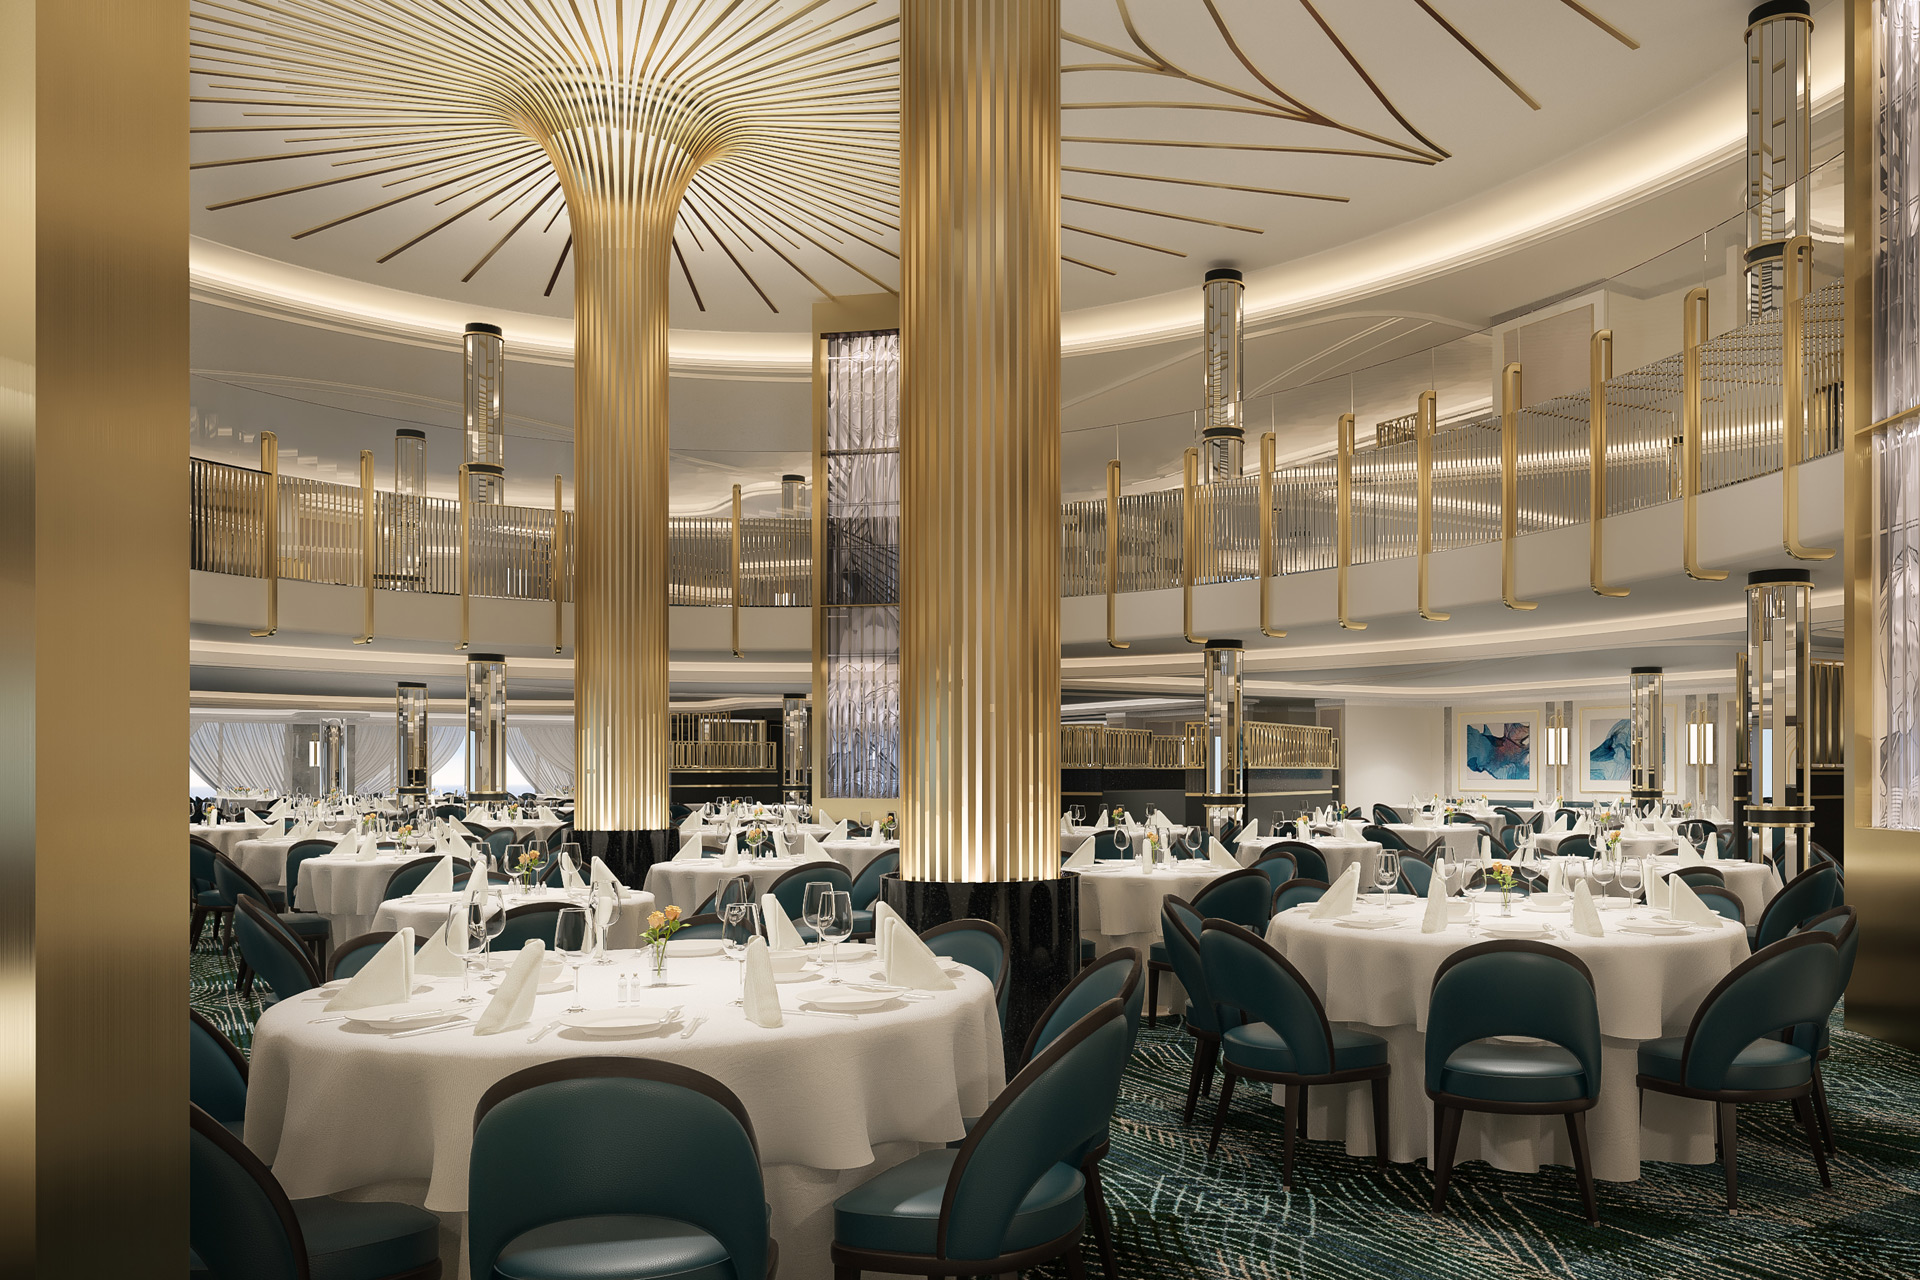 CGI rendering of the Britannia Restaurant on the Queen Anne cruise ship.